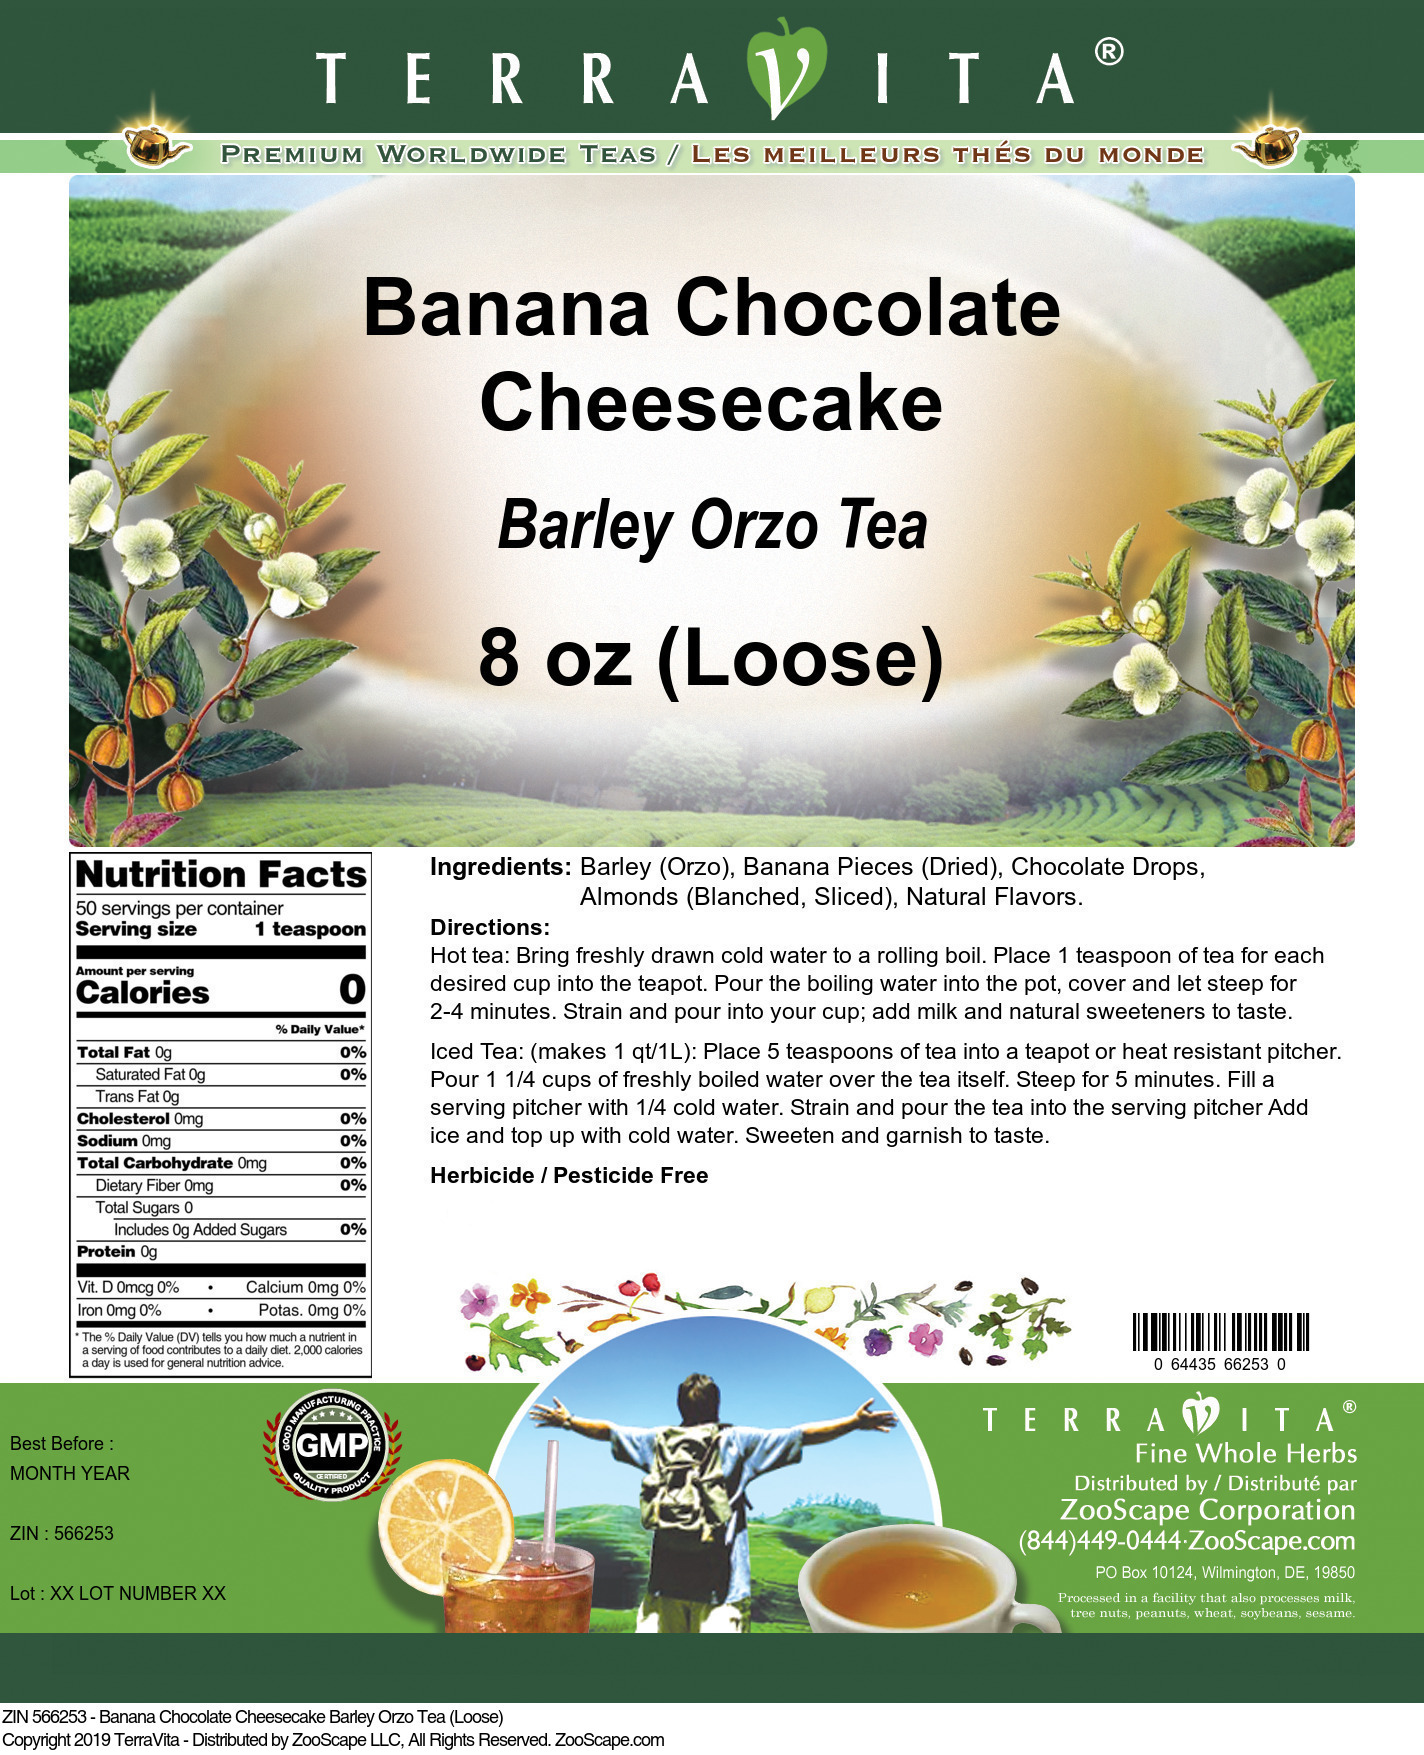 Banana Chocolate Cheesecake Barley Orzo Tea (Loose) - Label